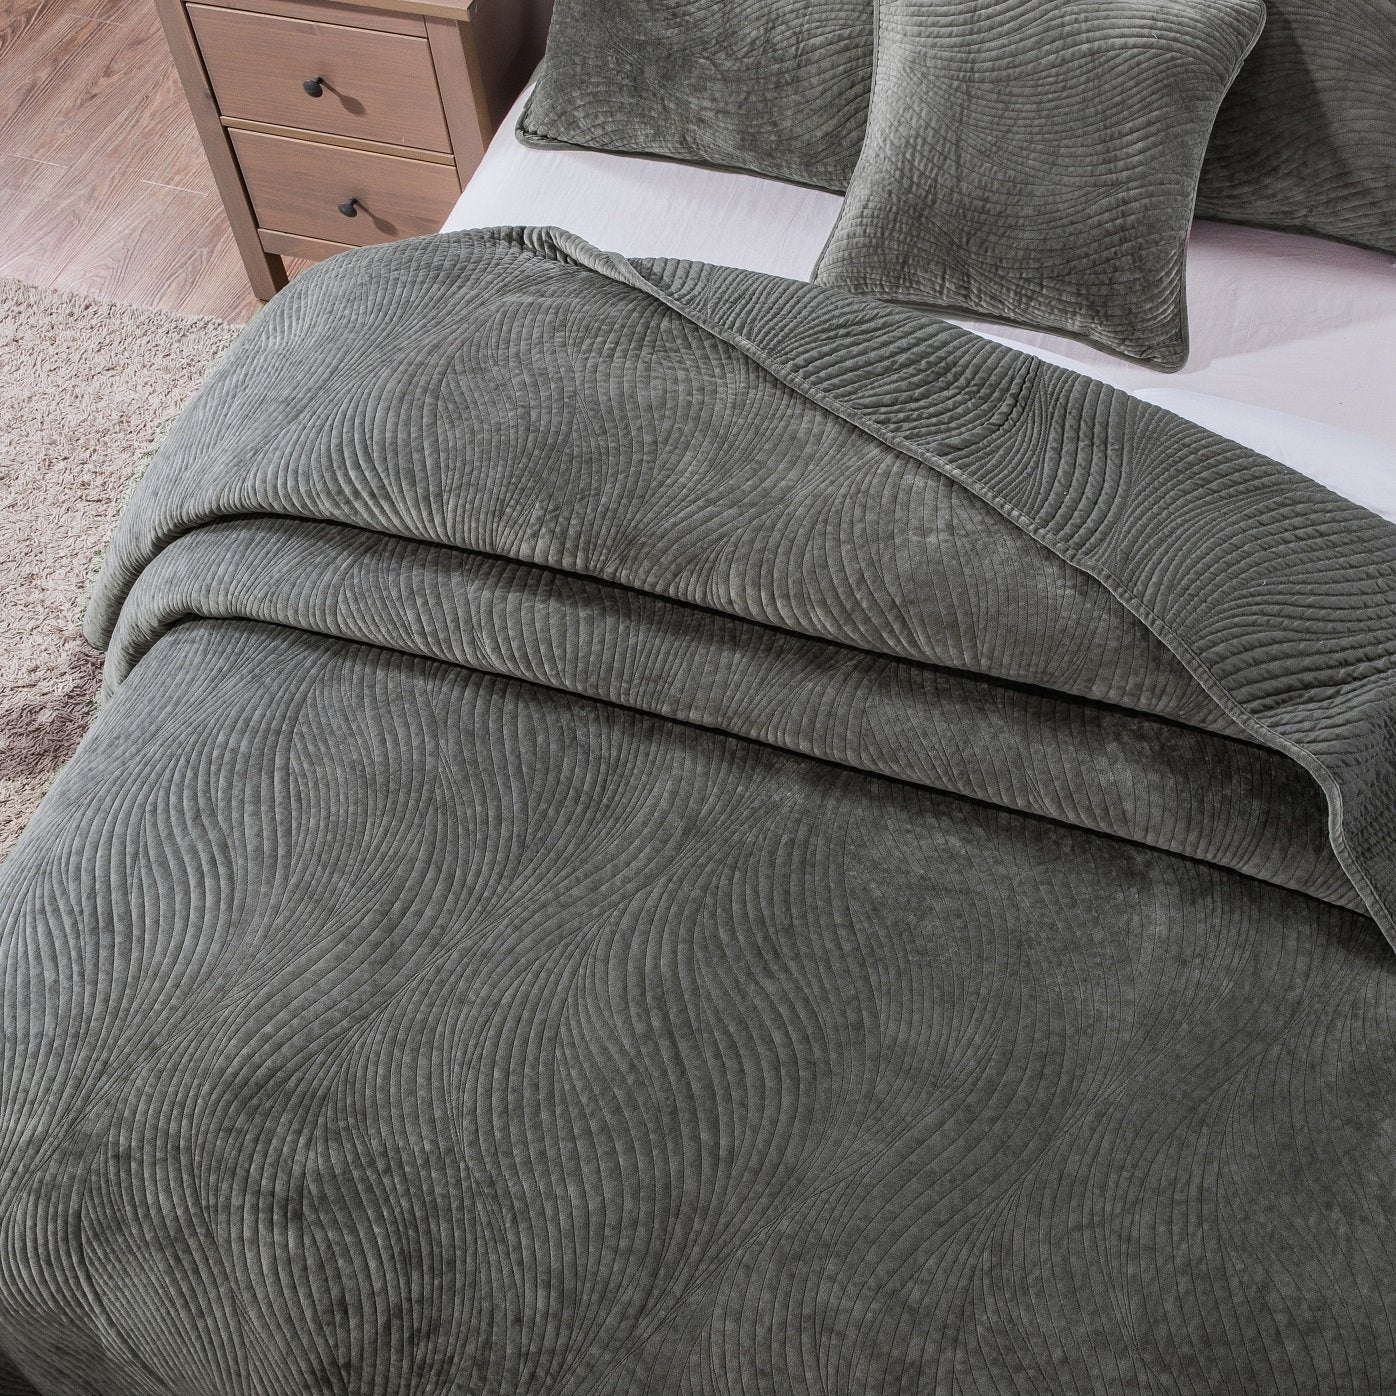 Tache Elegant Luxury Plush Dreams Dark Taupe Gray Waves Velvet Quilt Comforter Bedspread Bedding Set (JHW-852BR) - Tache Home Fashion